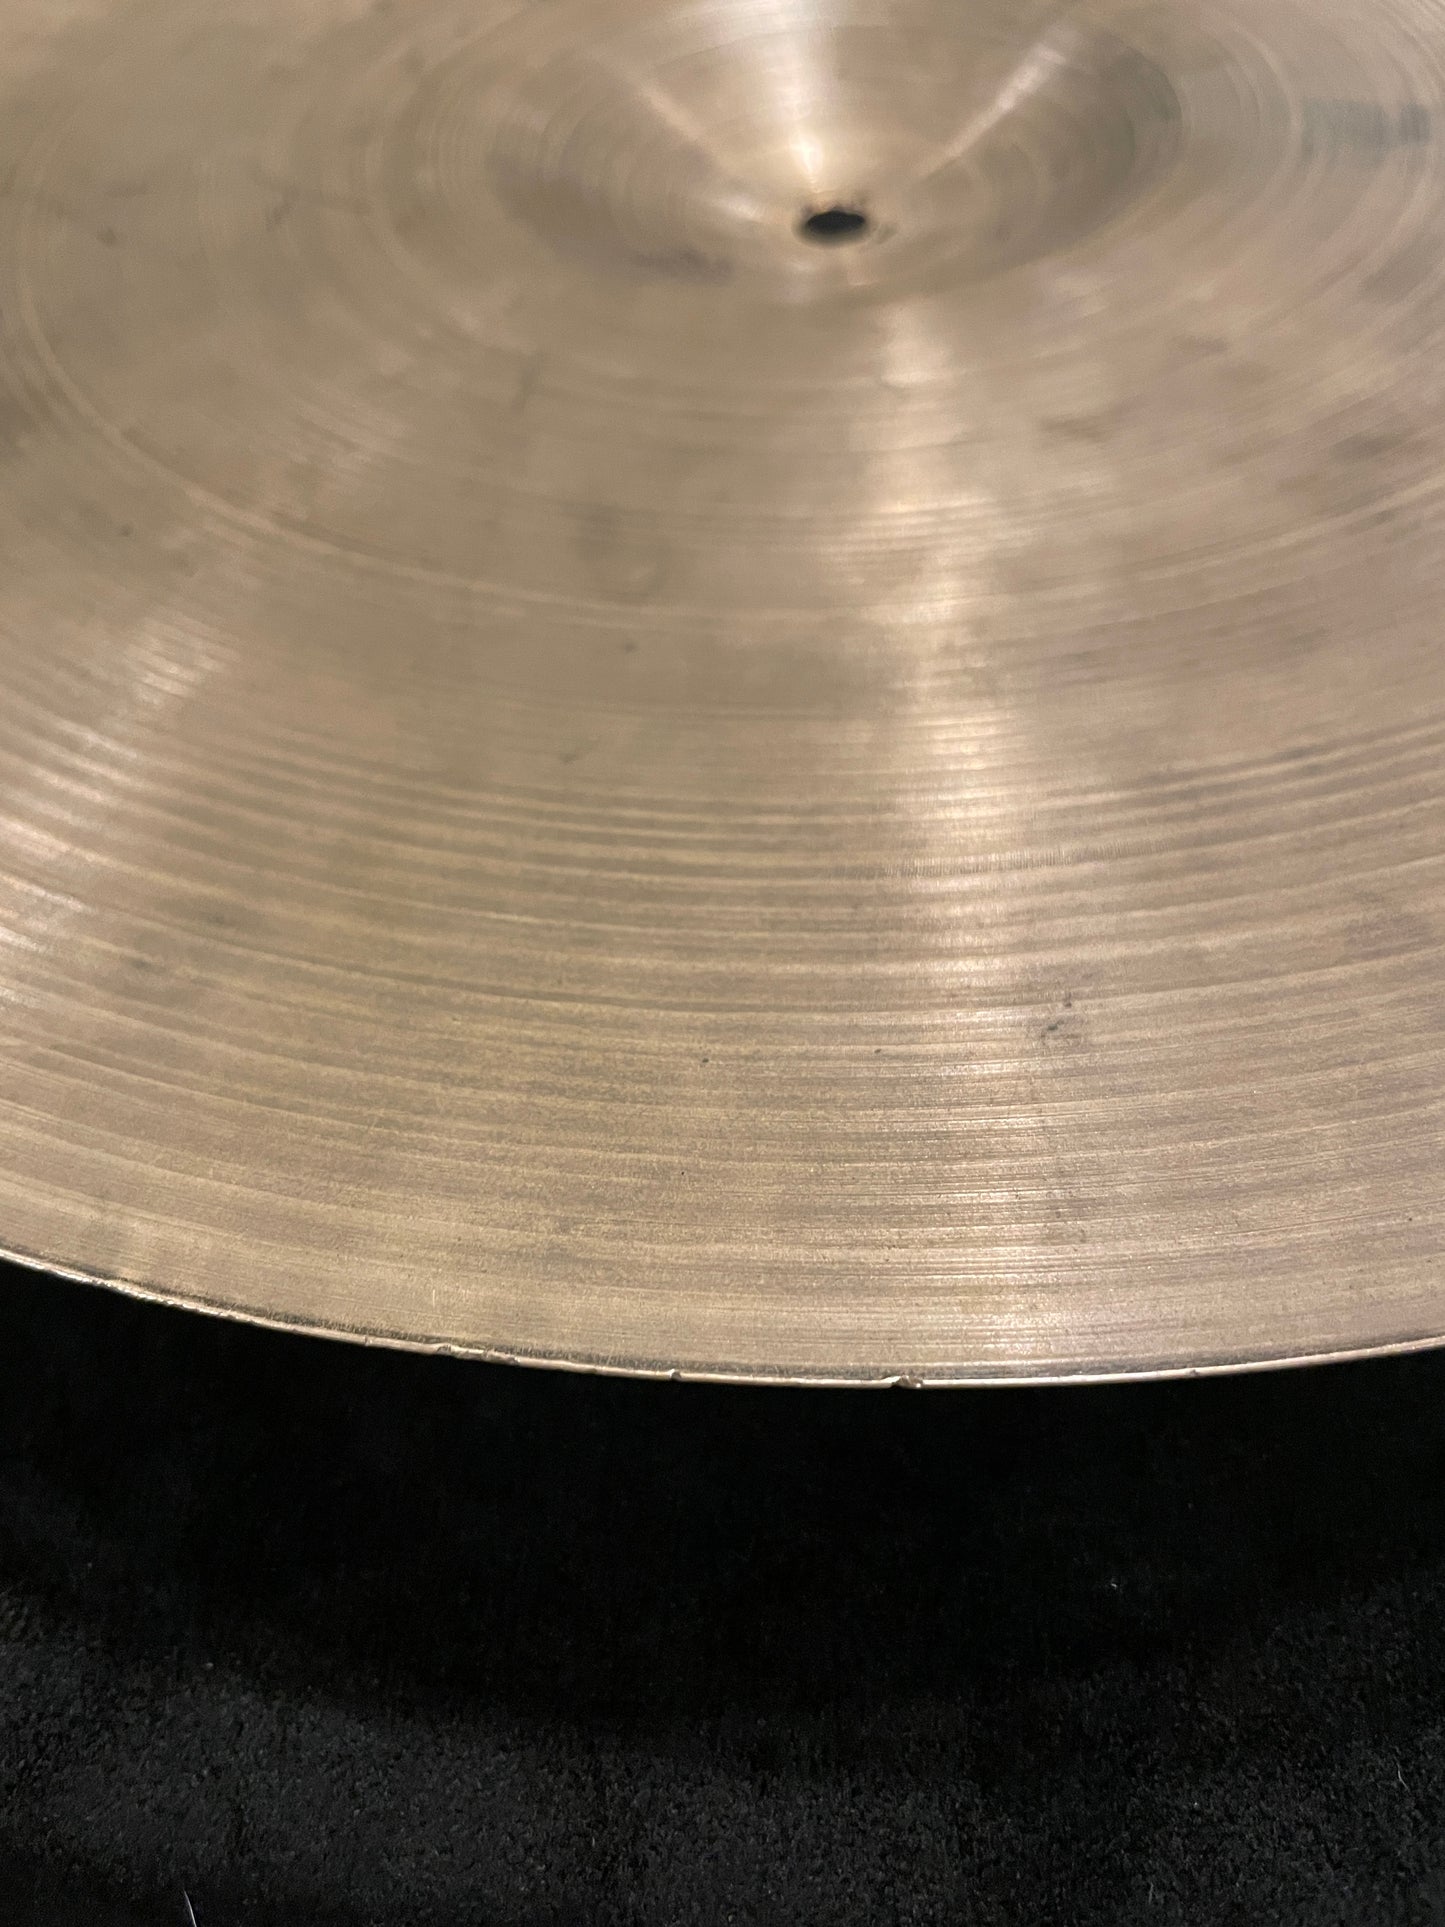 16" Zildjian A Trans Stamp Crash / Small Ride / Hi-Hat Bottom Cymbal 1484g #600